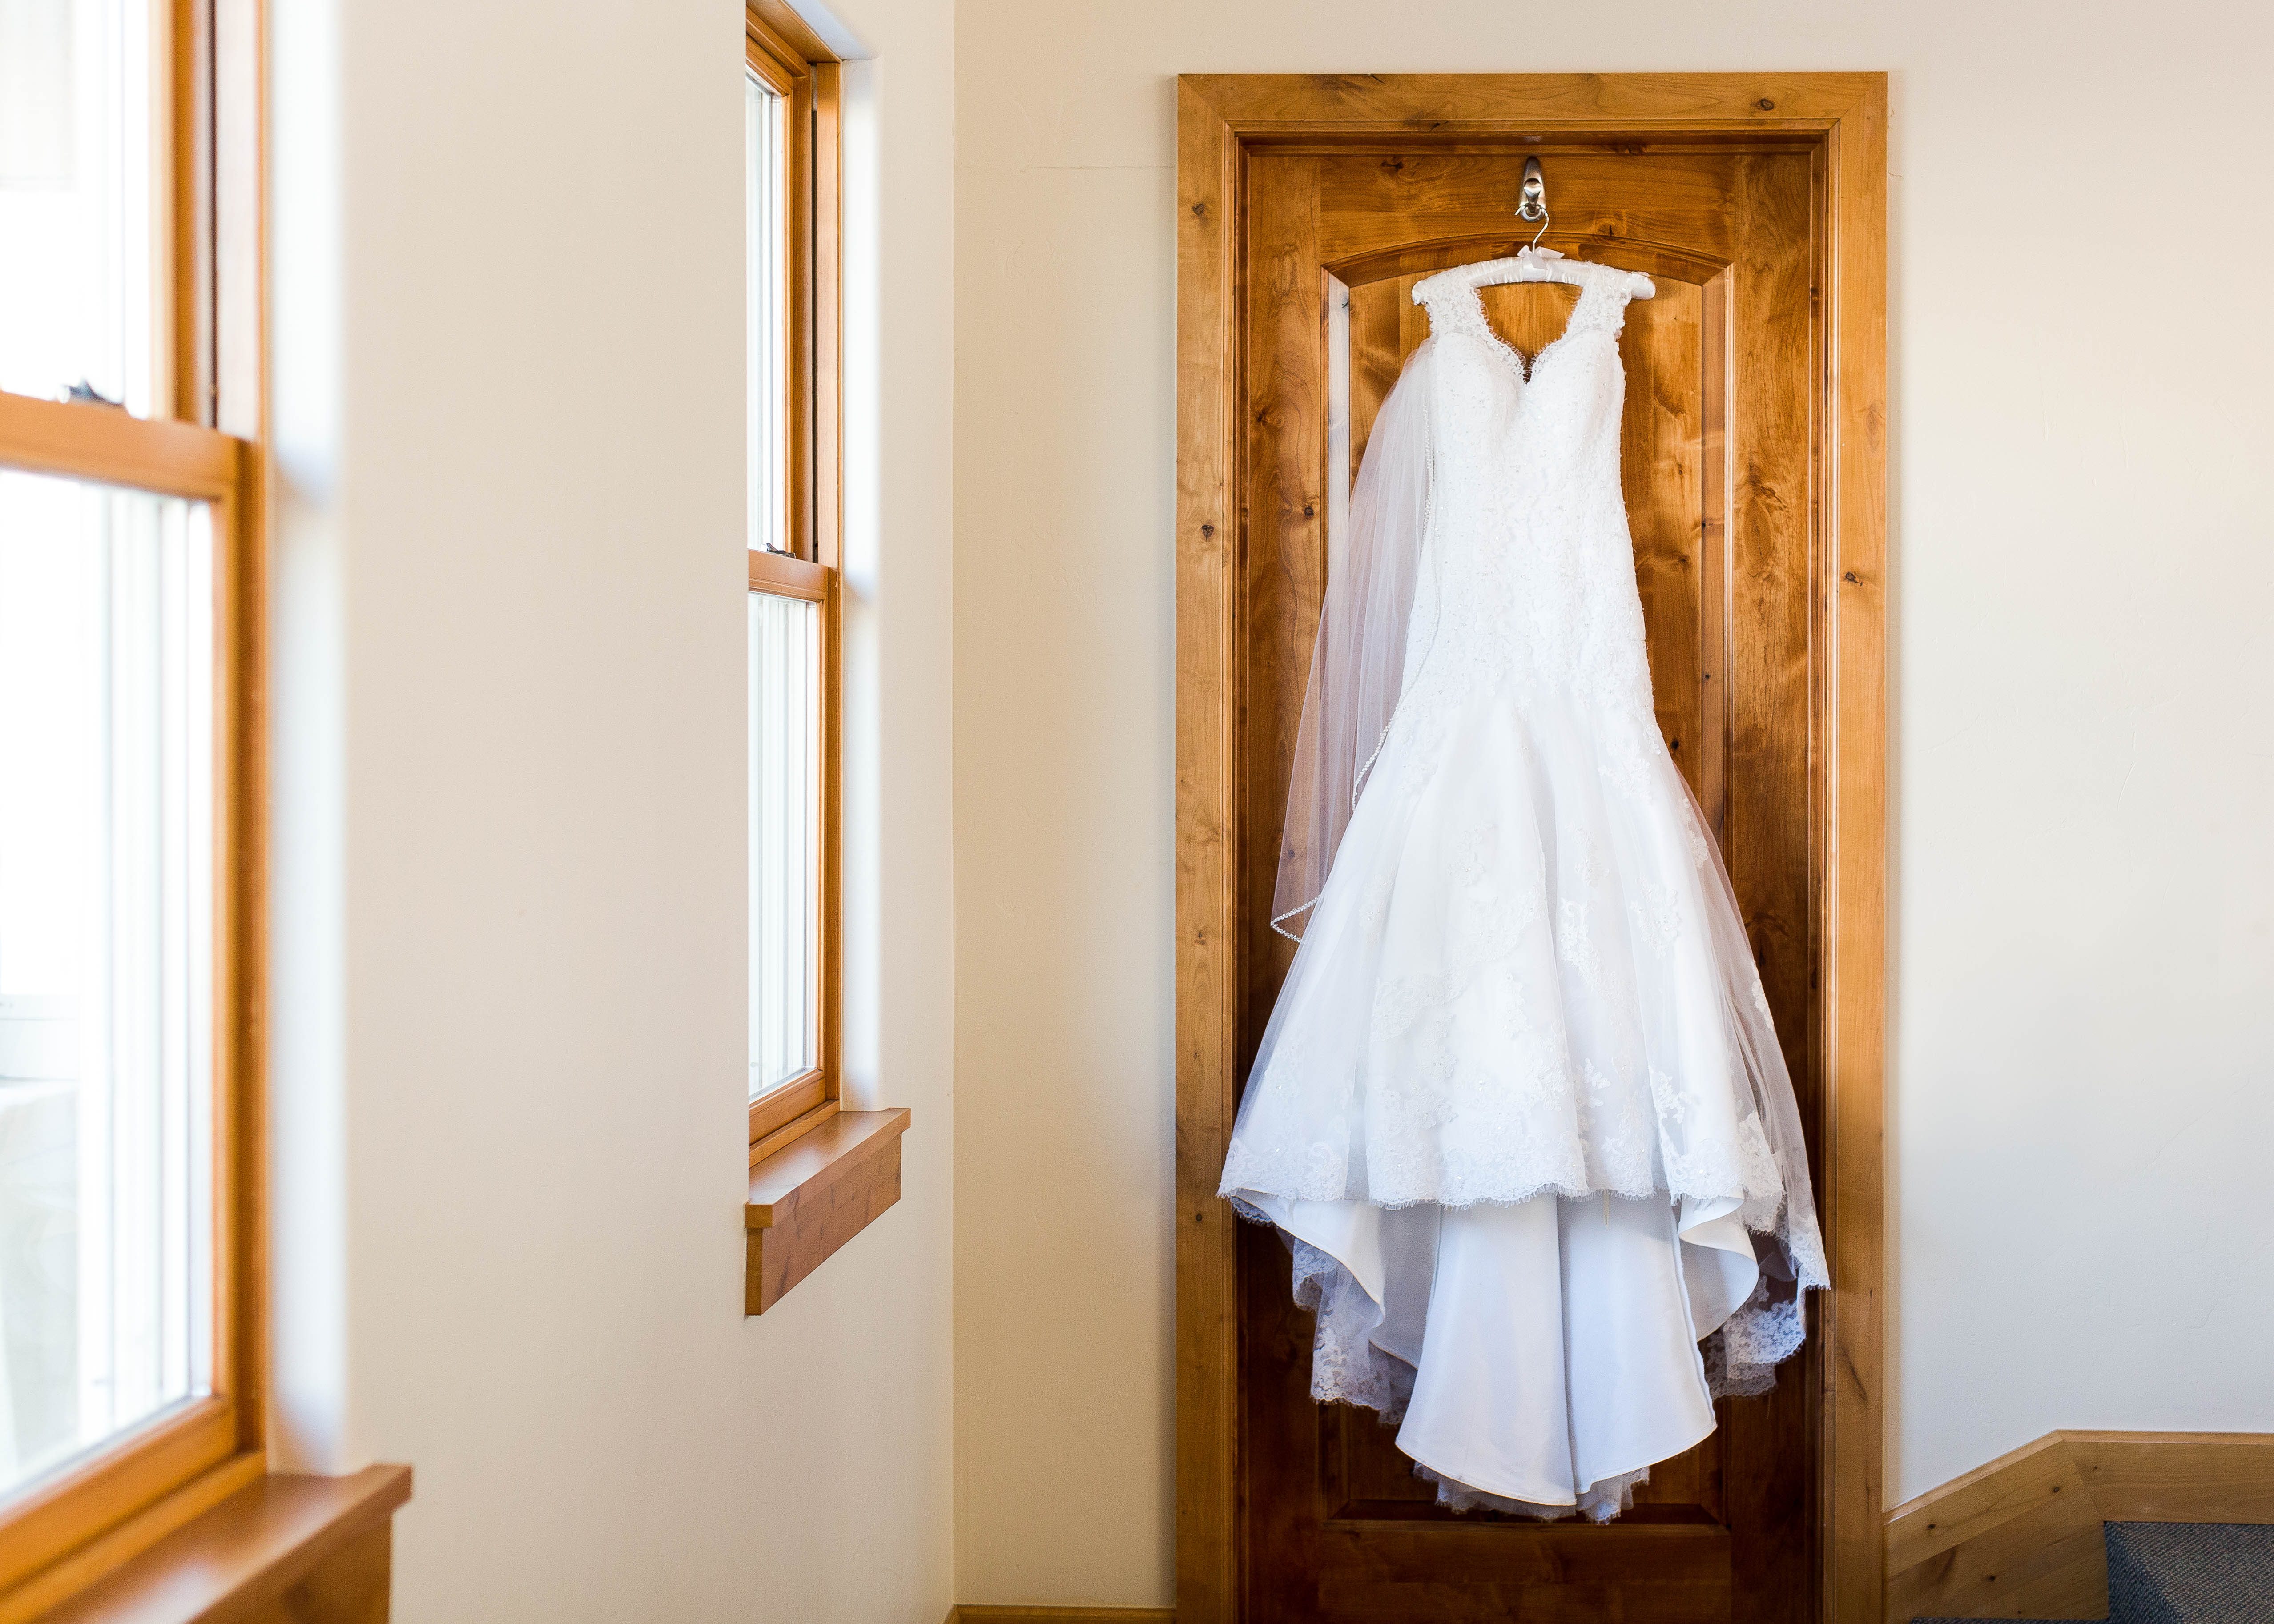 Elegant beaded sheath style wedding dress hangs from a wooden door